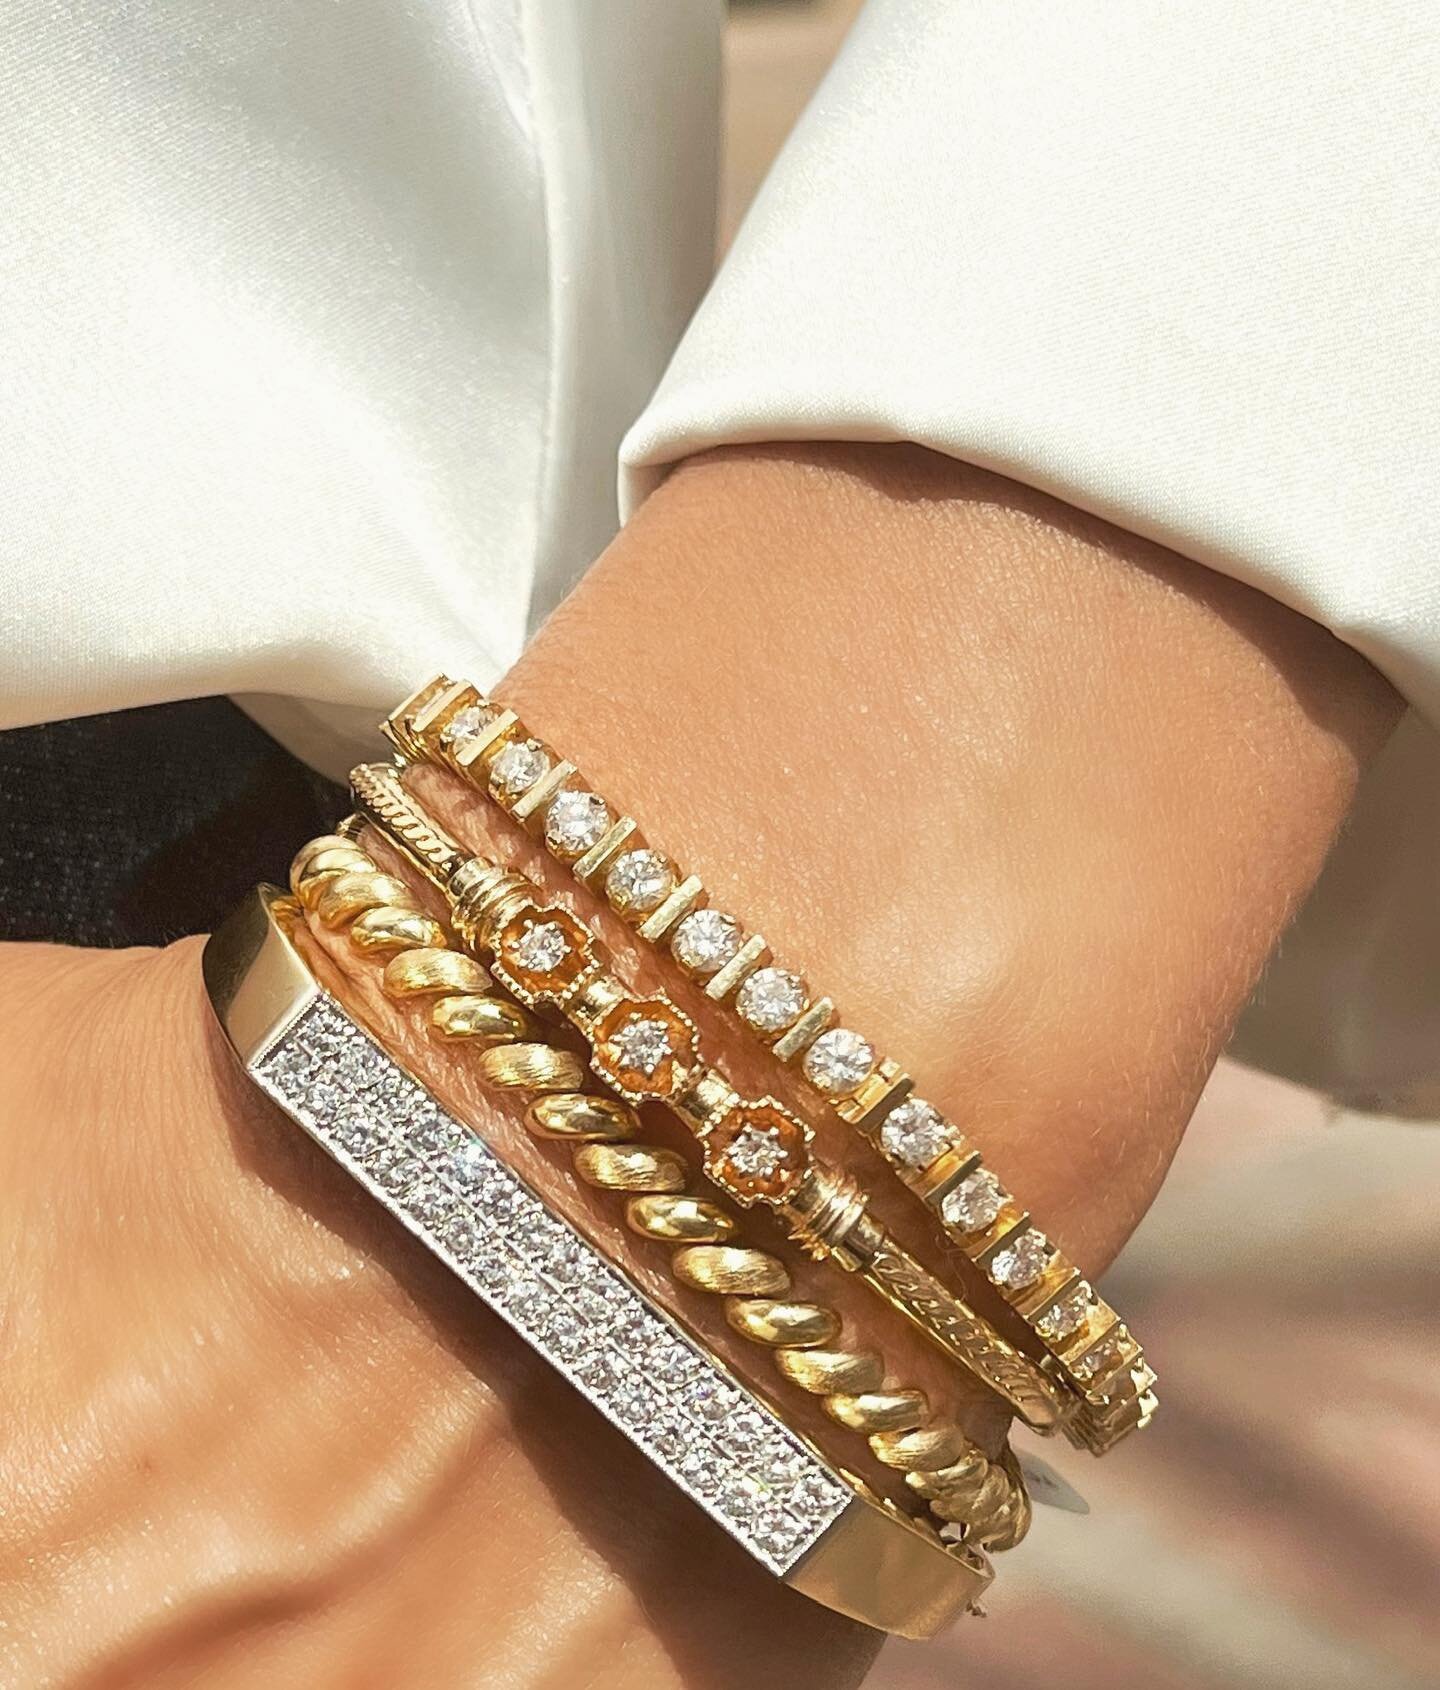 Line em up! #braceletstacks 
.
.
.
#toddandcompany #gold #diamond #braceletstacks #bracelet #vintage  #vintagestyle #jewelry #palmsprings #palmdesert #indianwells #ranchomirage #instalove #estatejewelry #laquinta